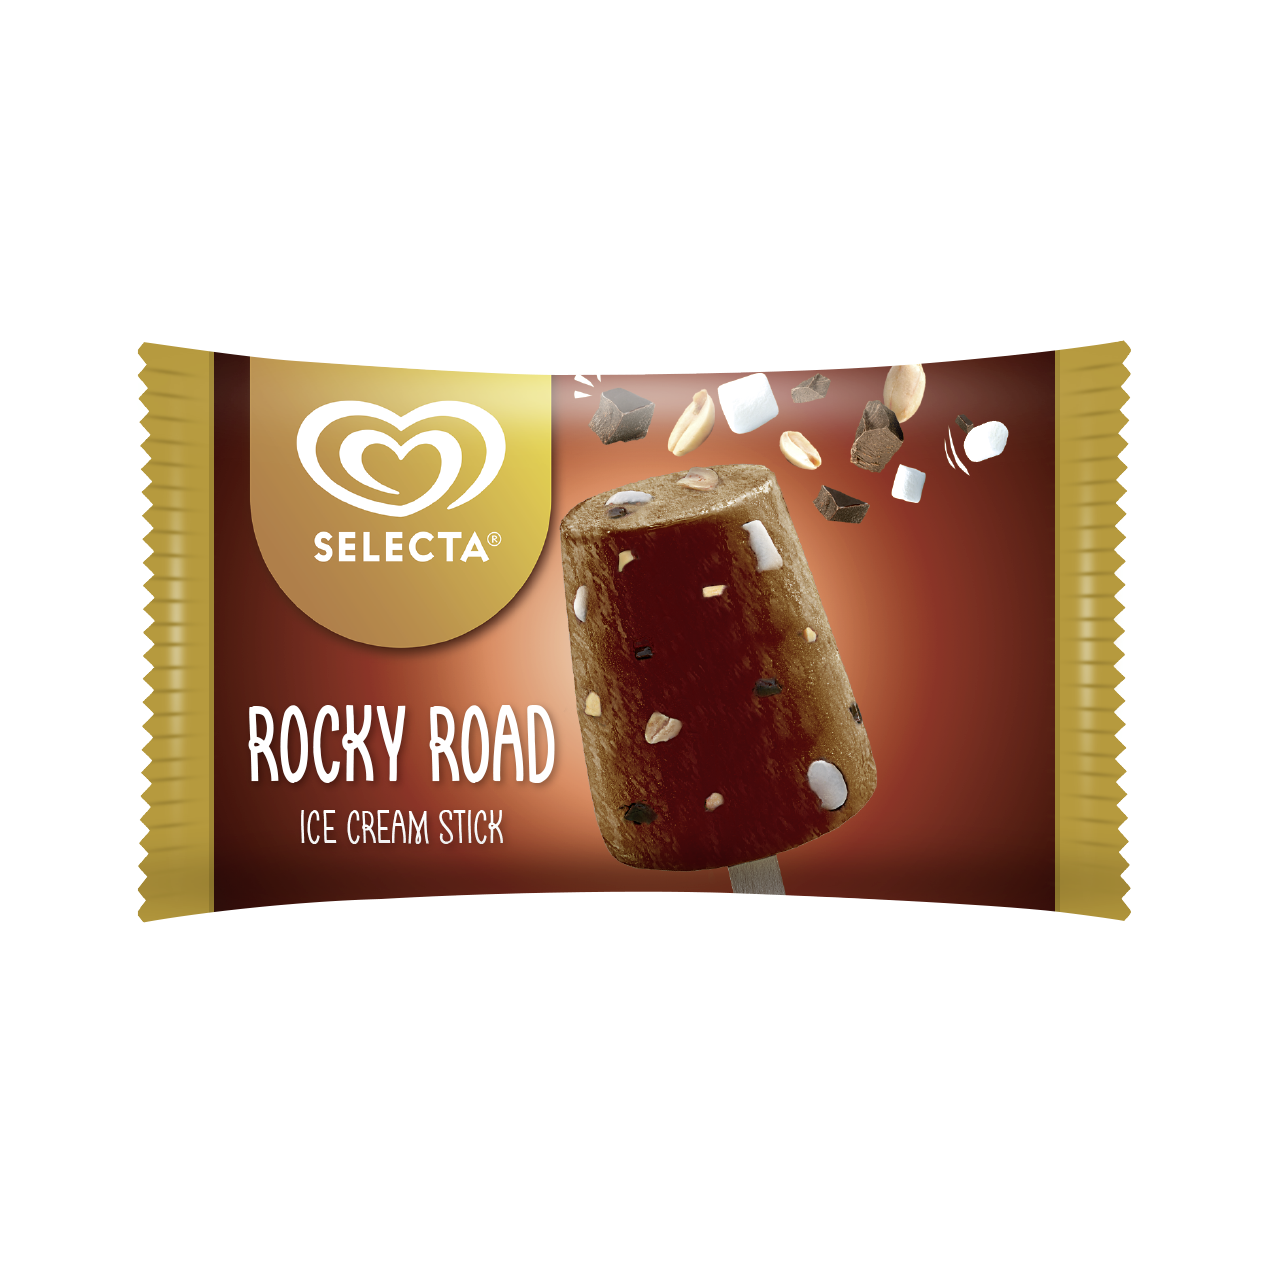 Selecta Rocky Road Ice Cream Stick